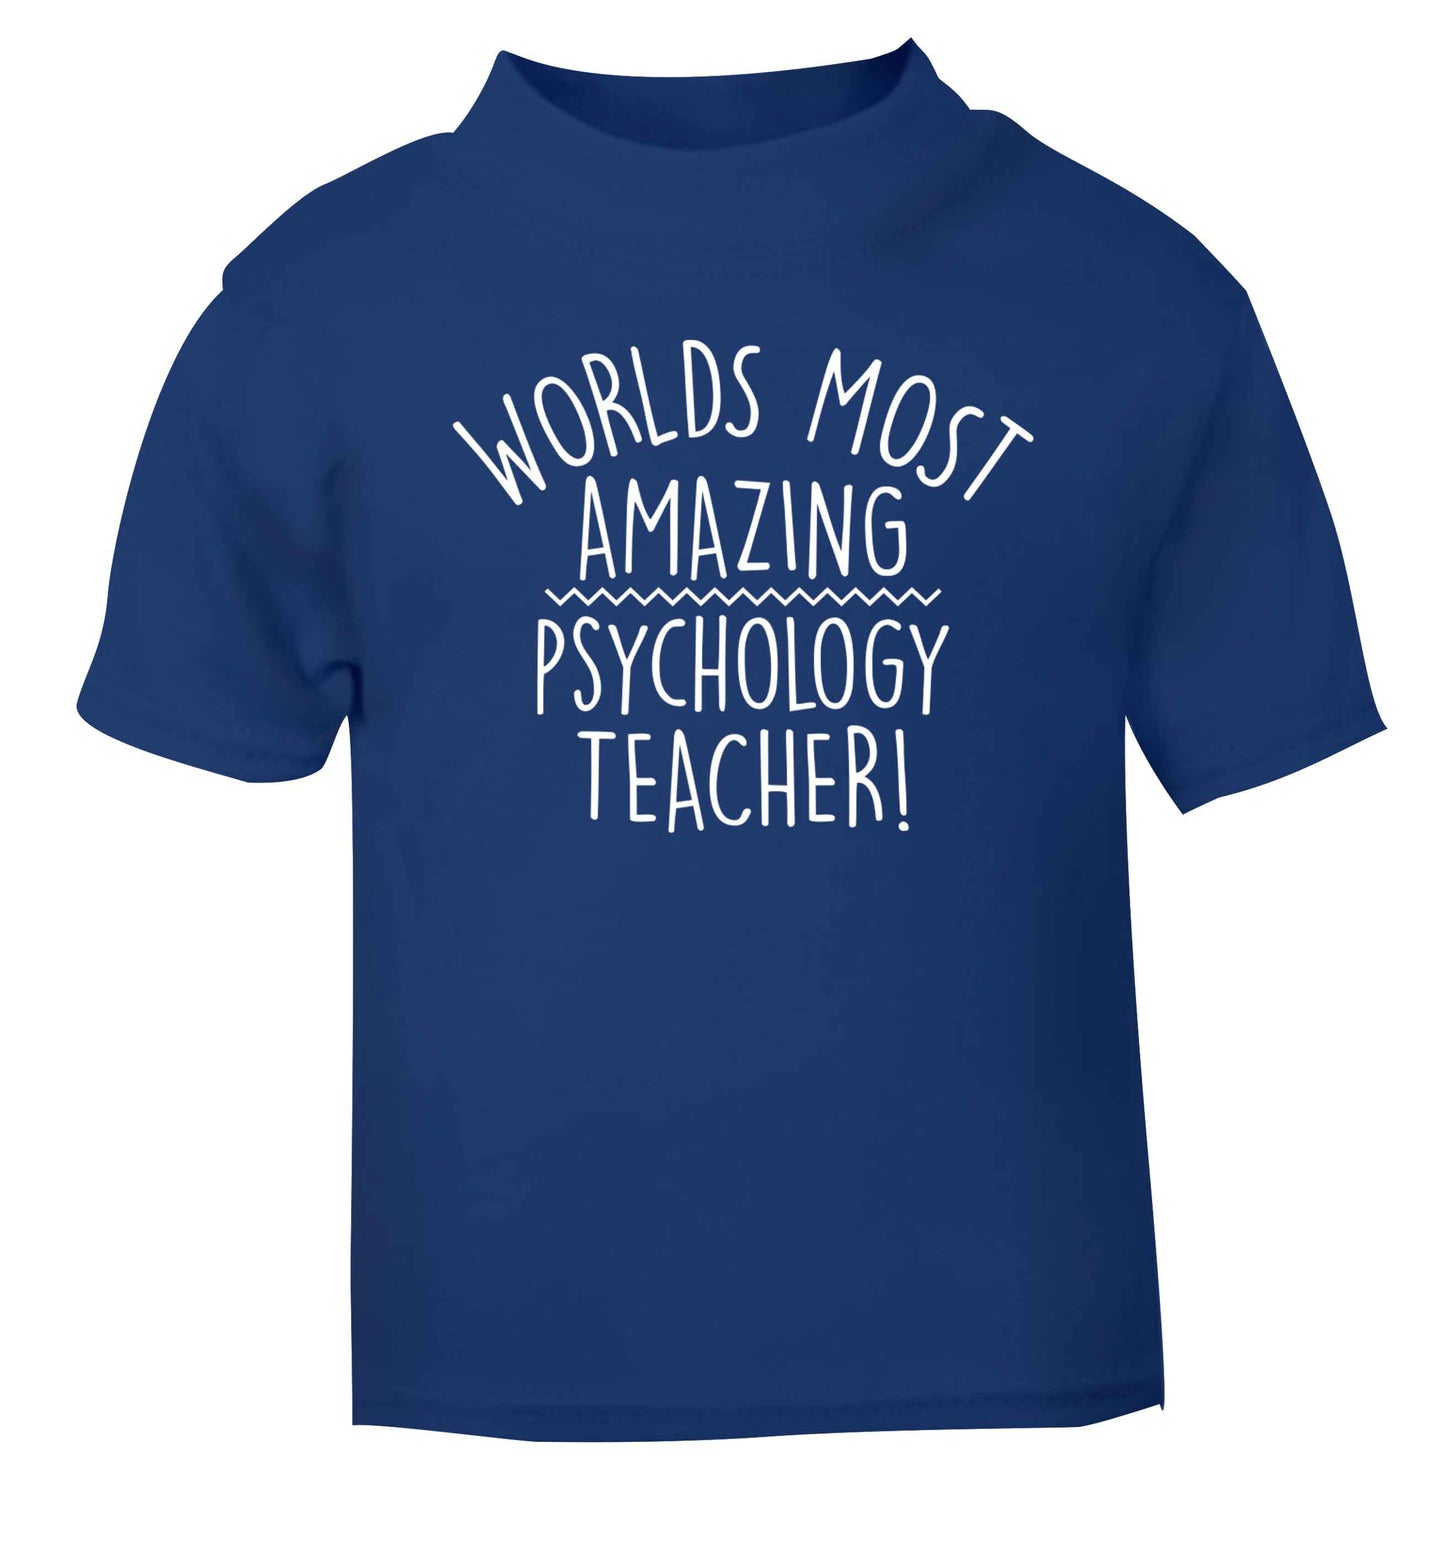 Worlds most amazing psychology teacher blue baby toddler Tshirt 2 Years